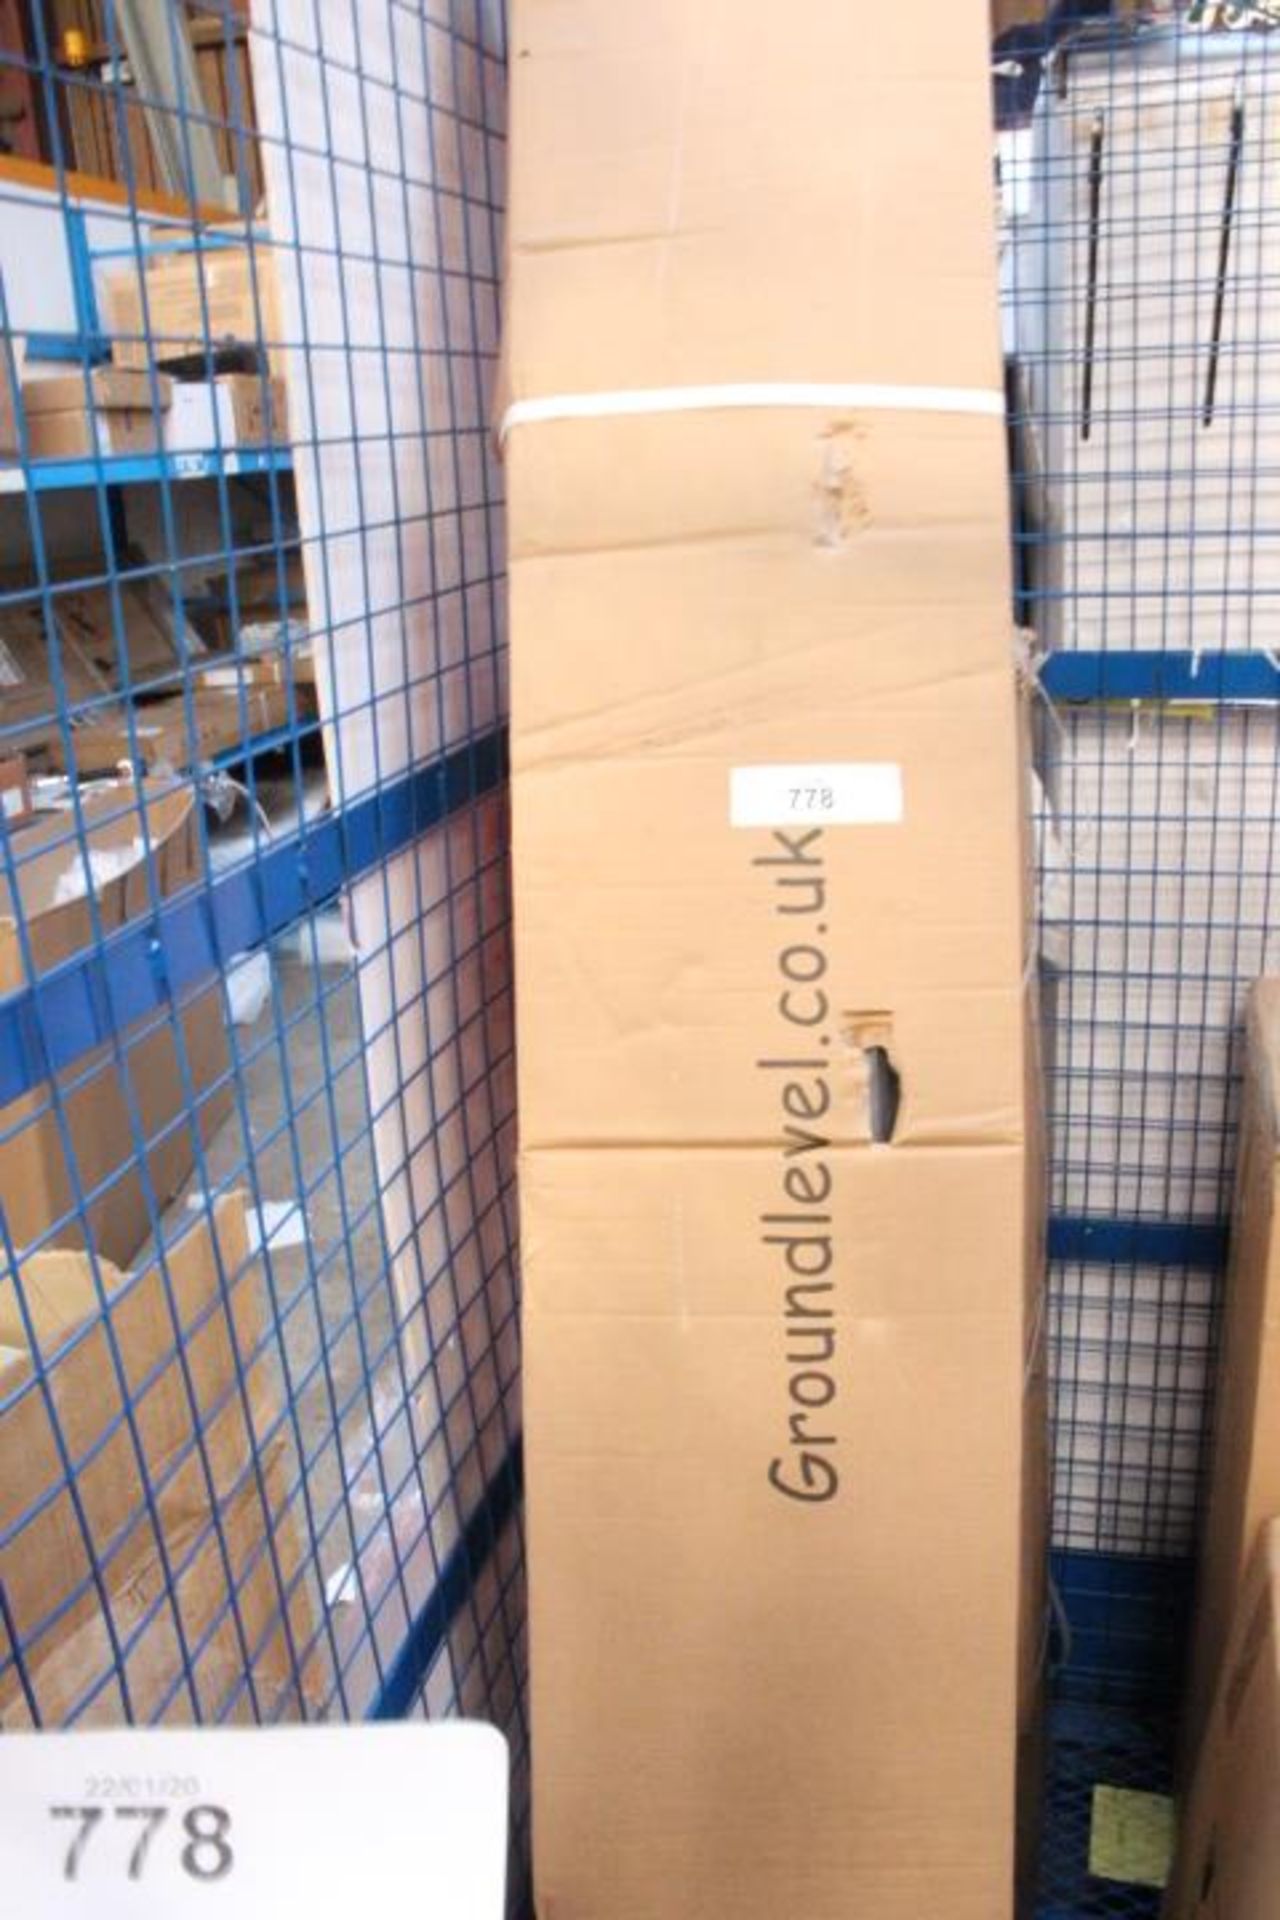 1 x Groundlevel cream garden umbrella - New in box (GS30)